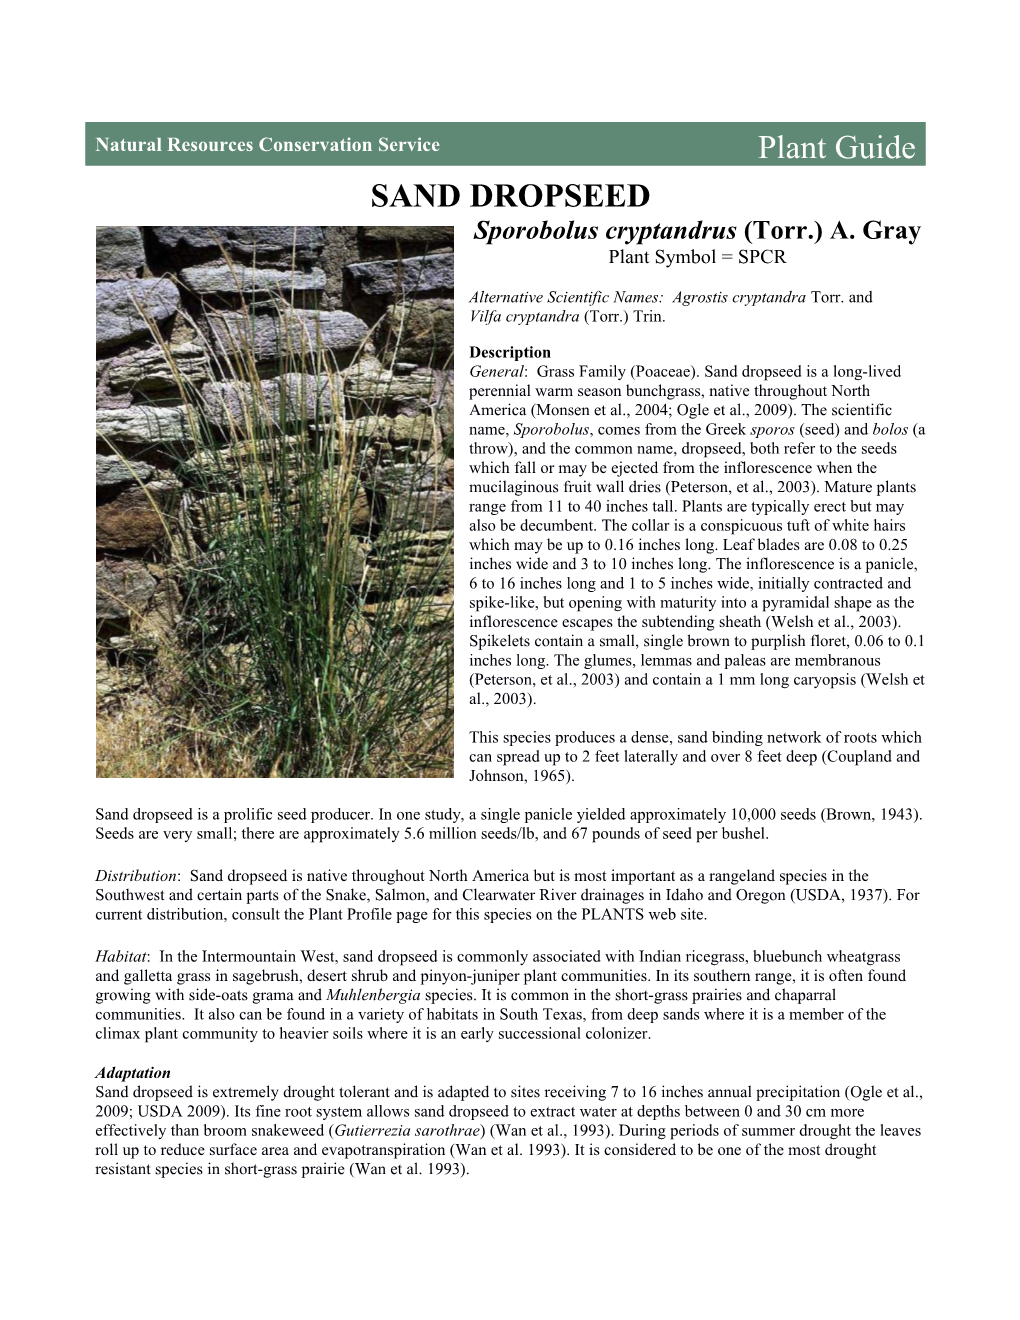 Sand Dropseed (Sporobolus Cryptandrus) Plant Guide